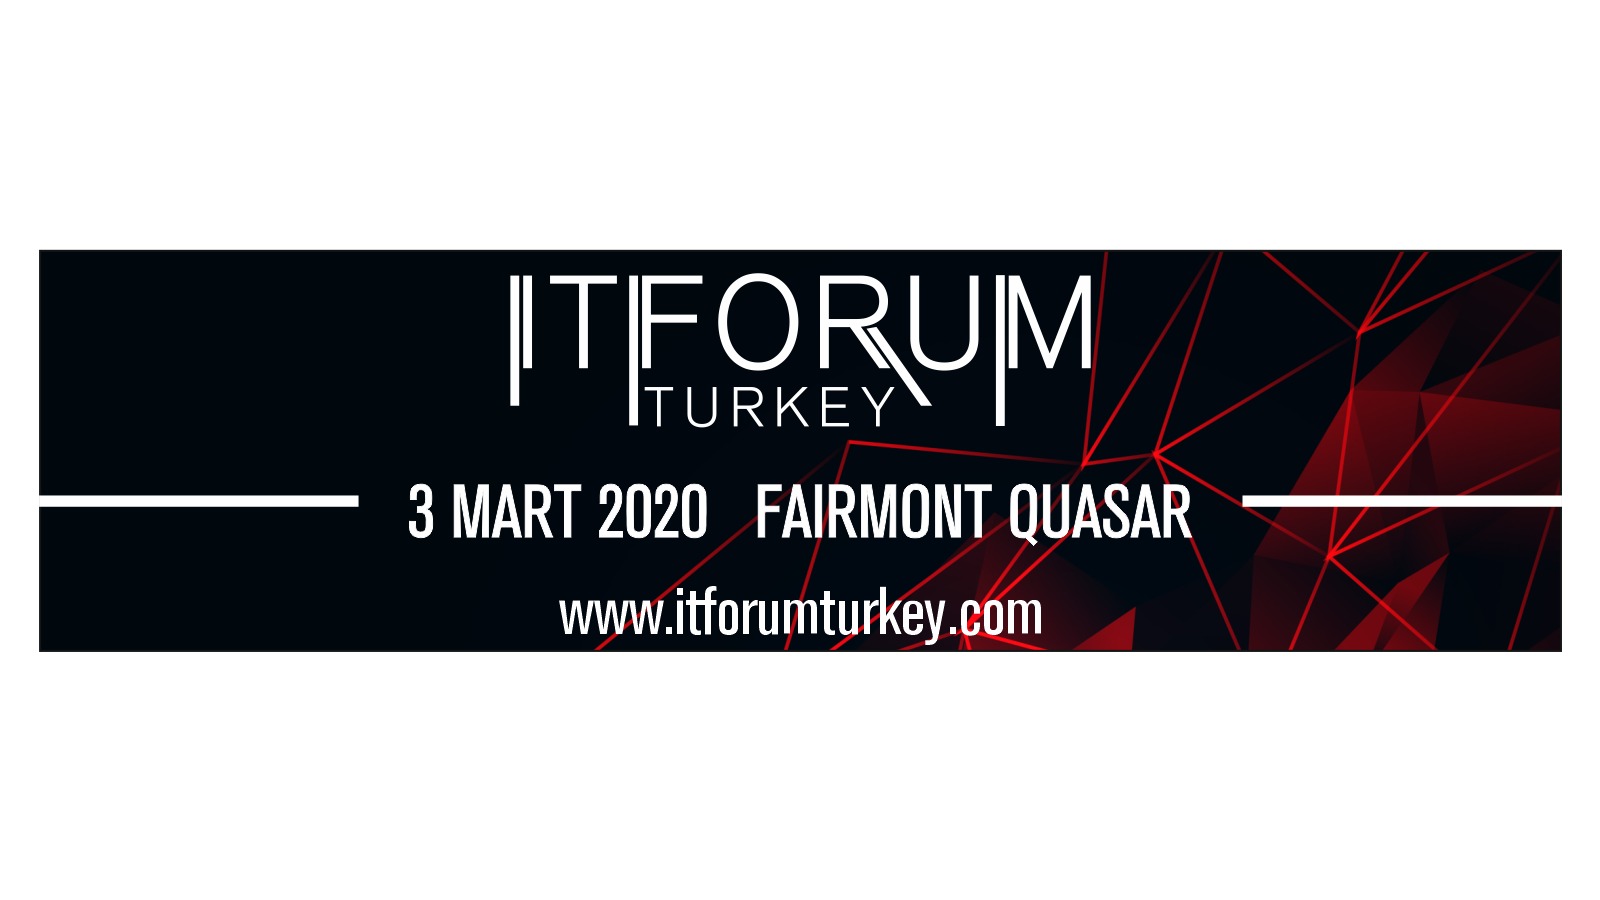 IT FORUM TURKEY